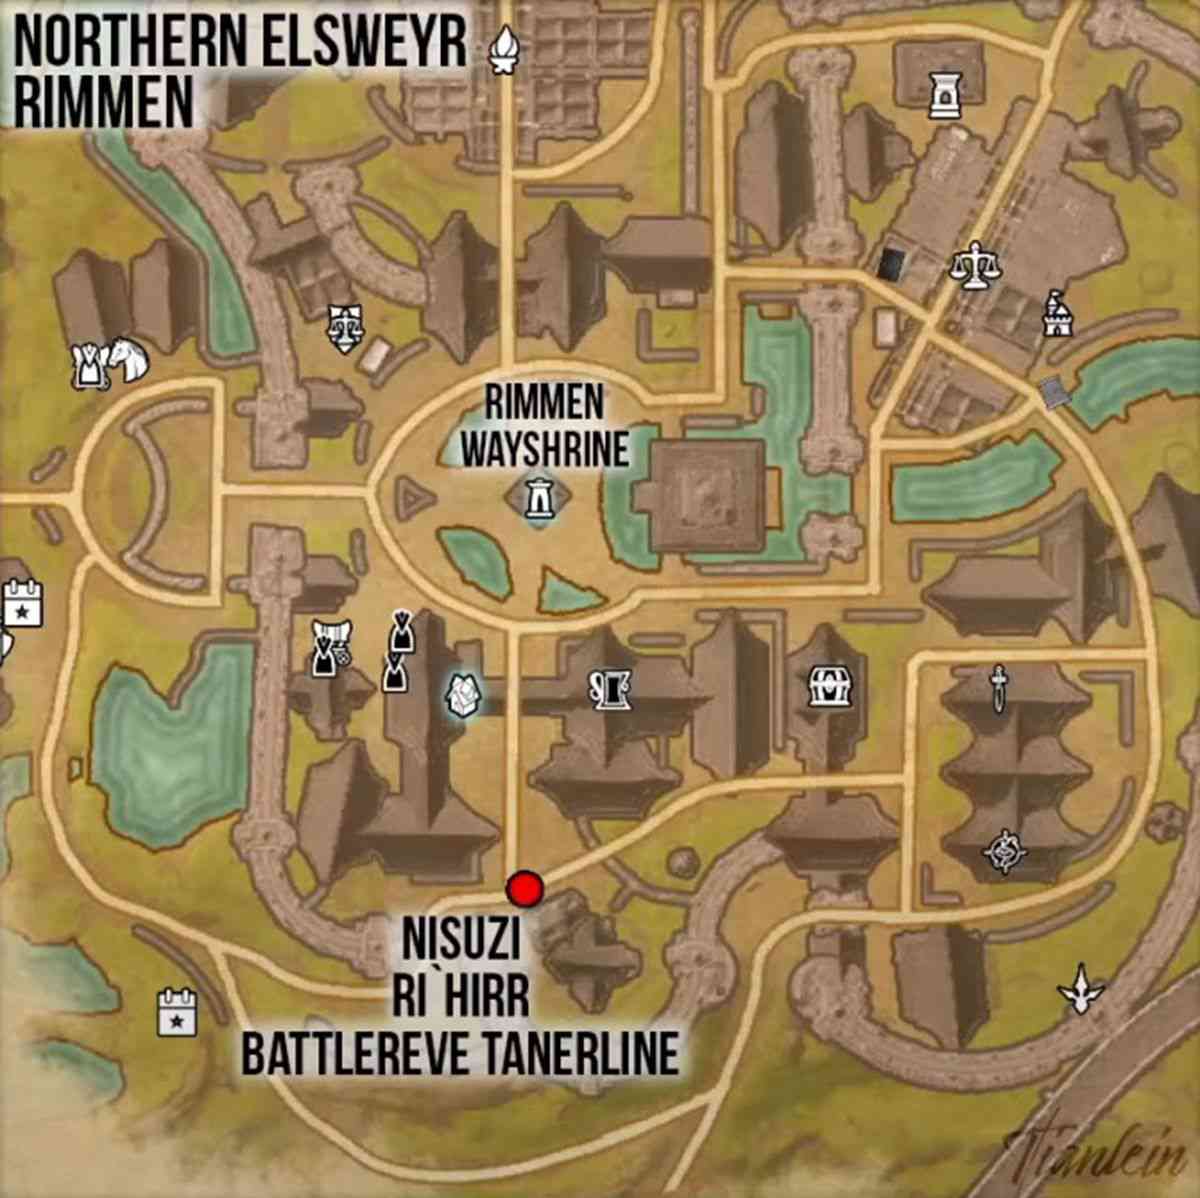 Where to find Nisuzi, Ri'hirr, and Battlereeve Tanerline